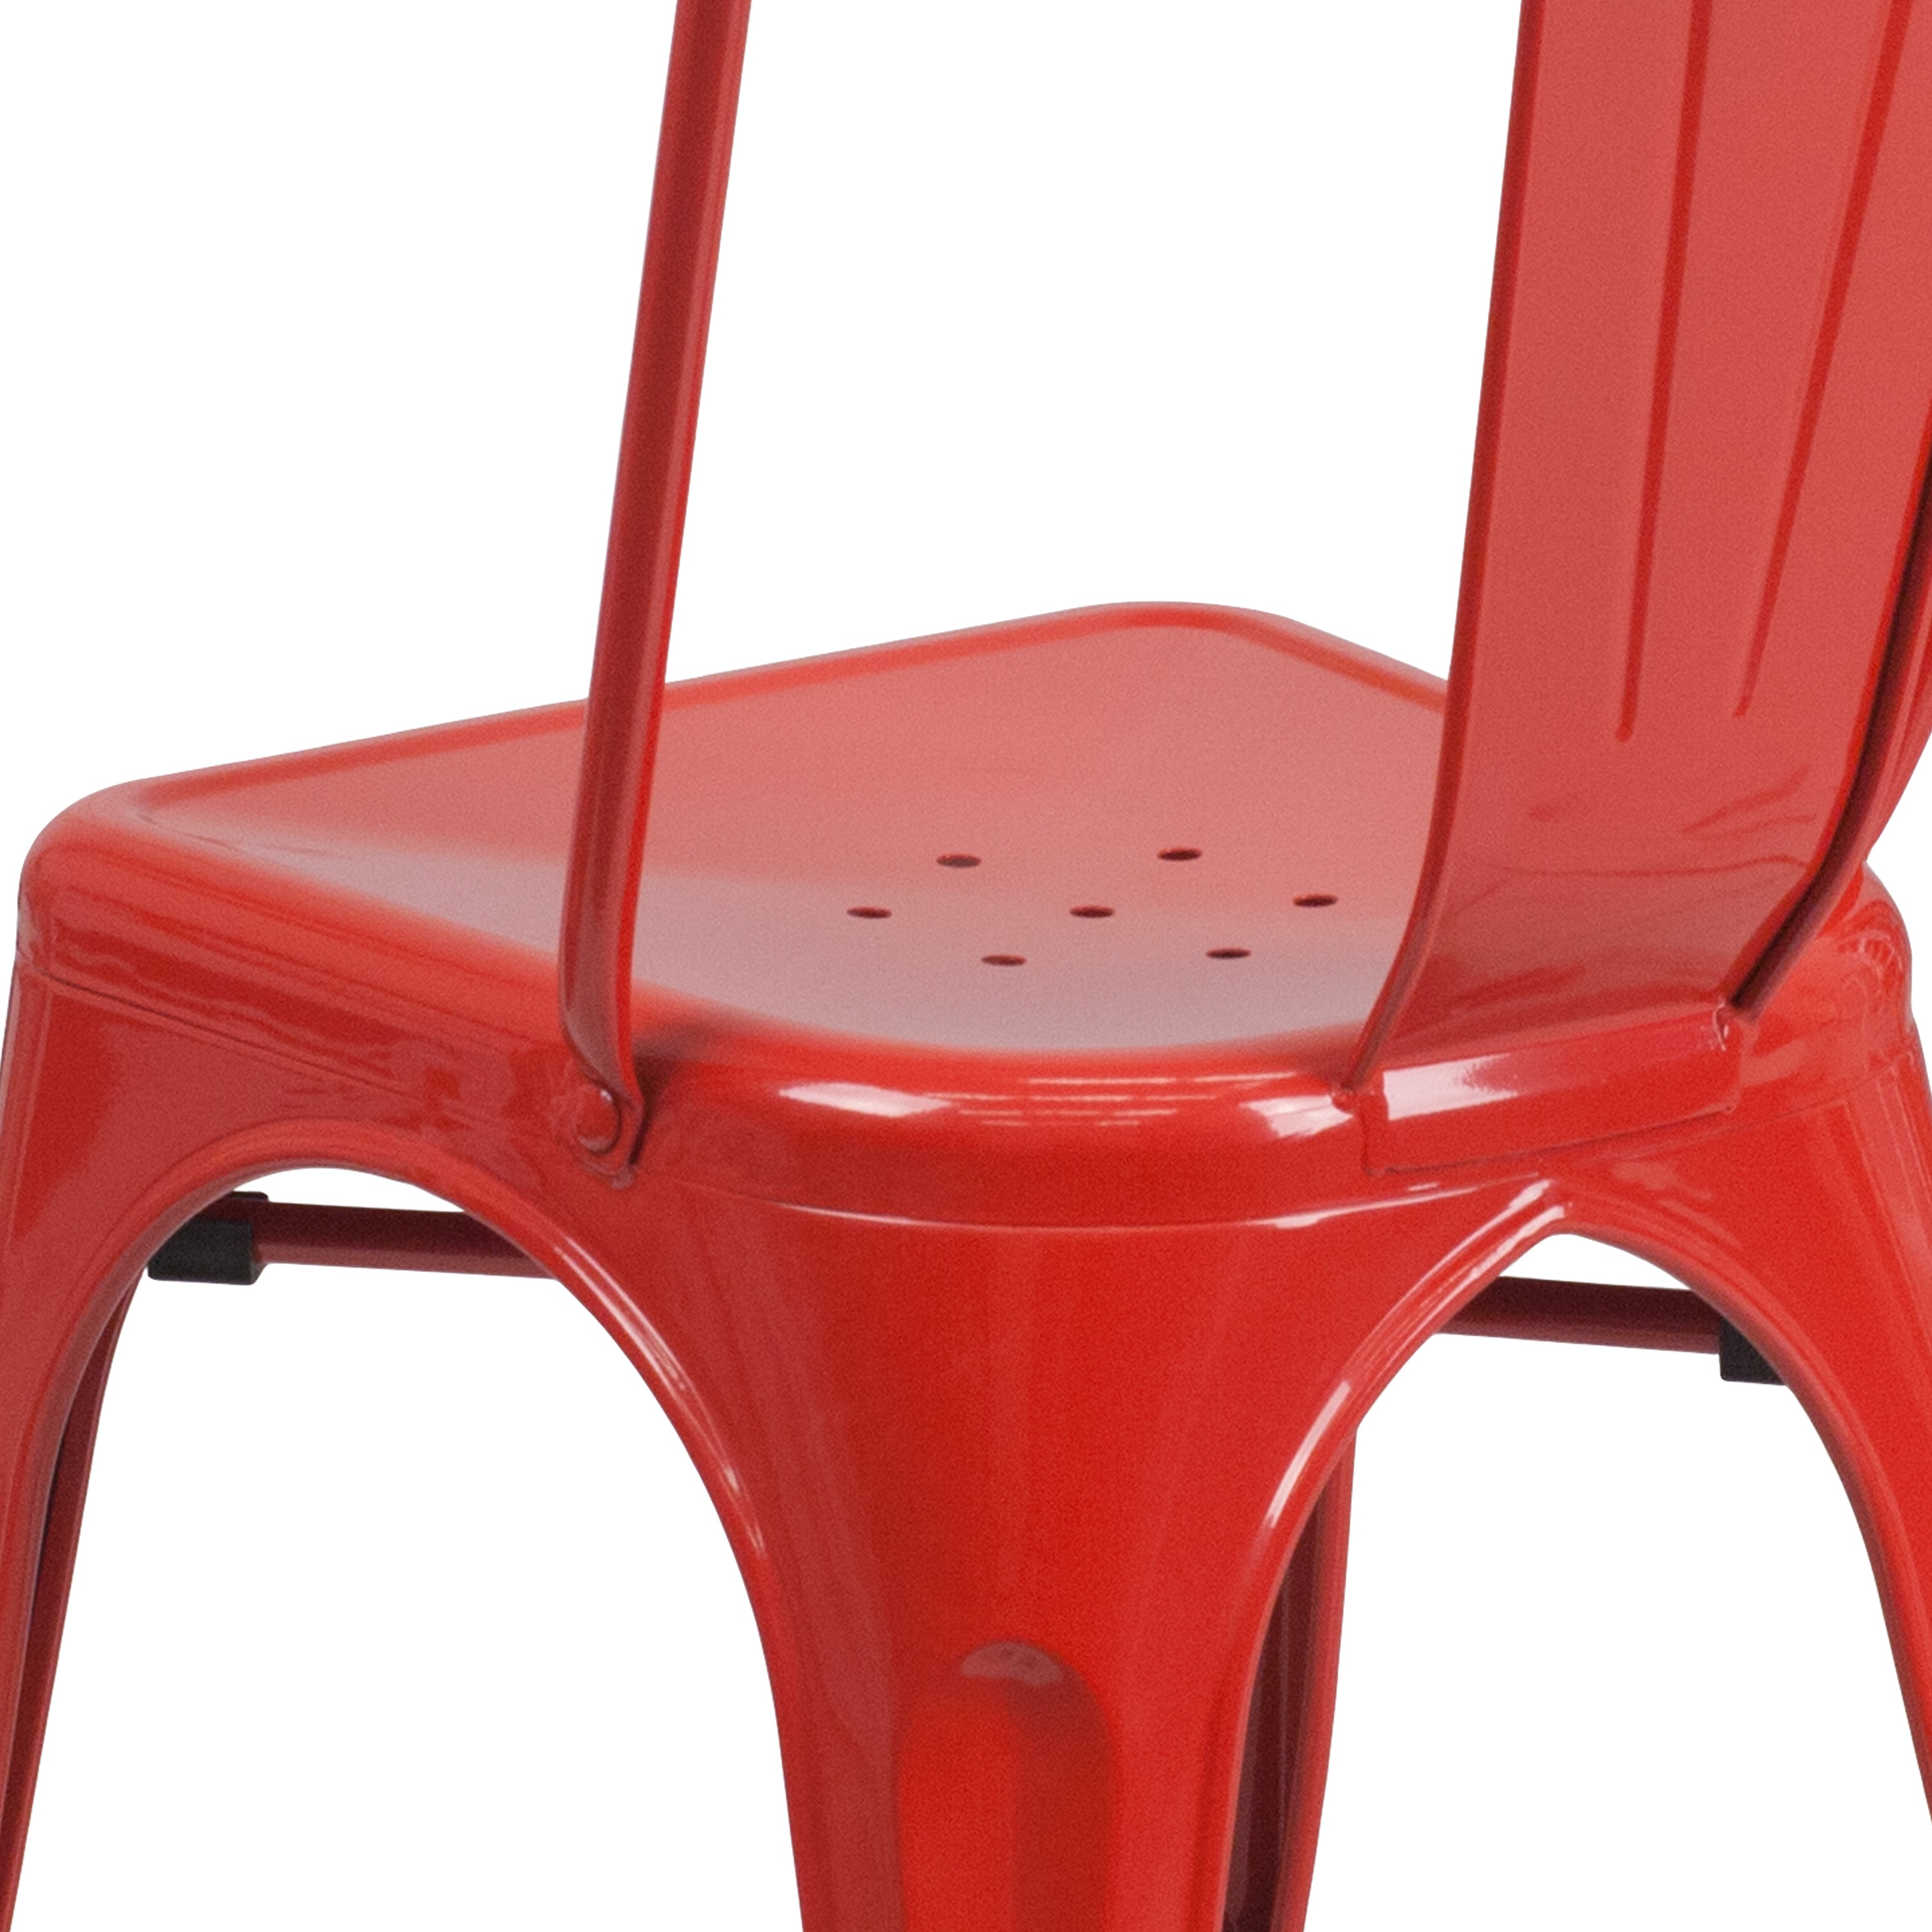 Commercial Grade Metal Indoor-Outdoor Stackable Chair-Indoor/Outdoor Chairs-Flash Furniture-Wall2Wall Furnishings